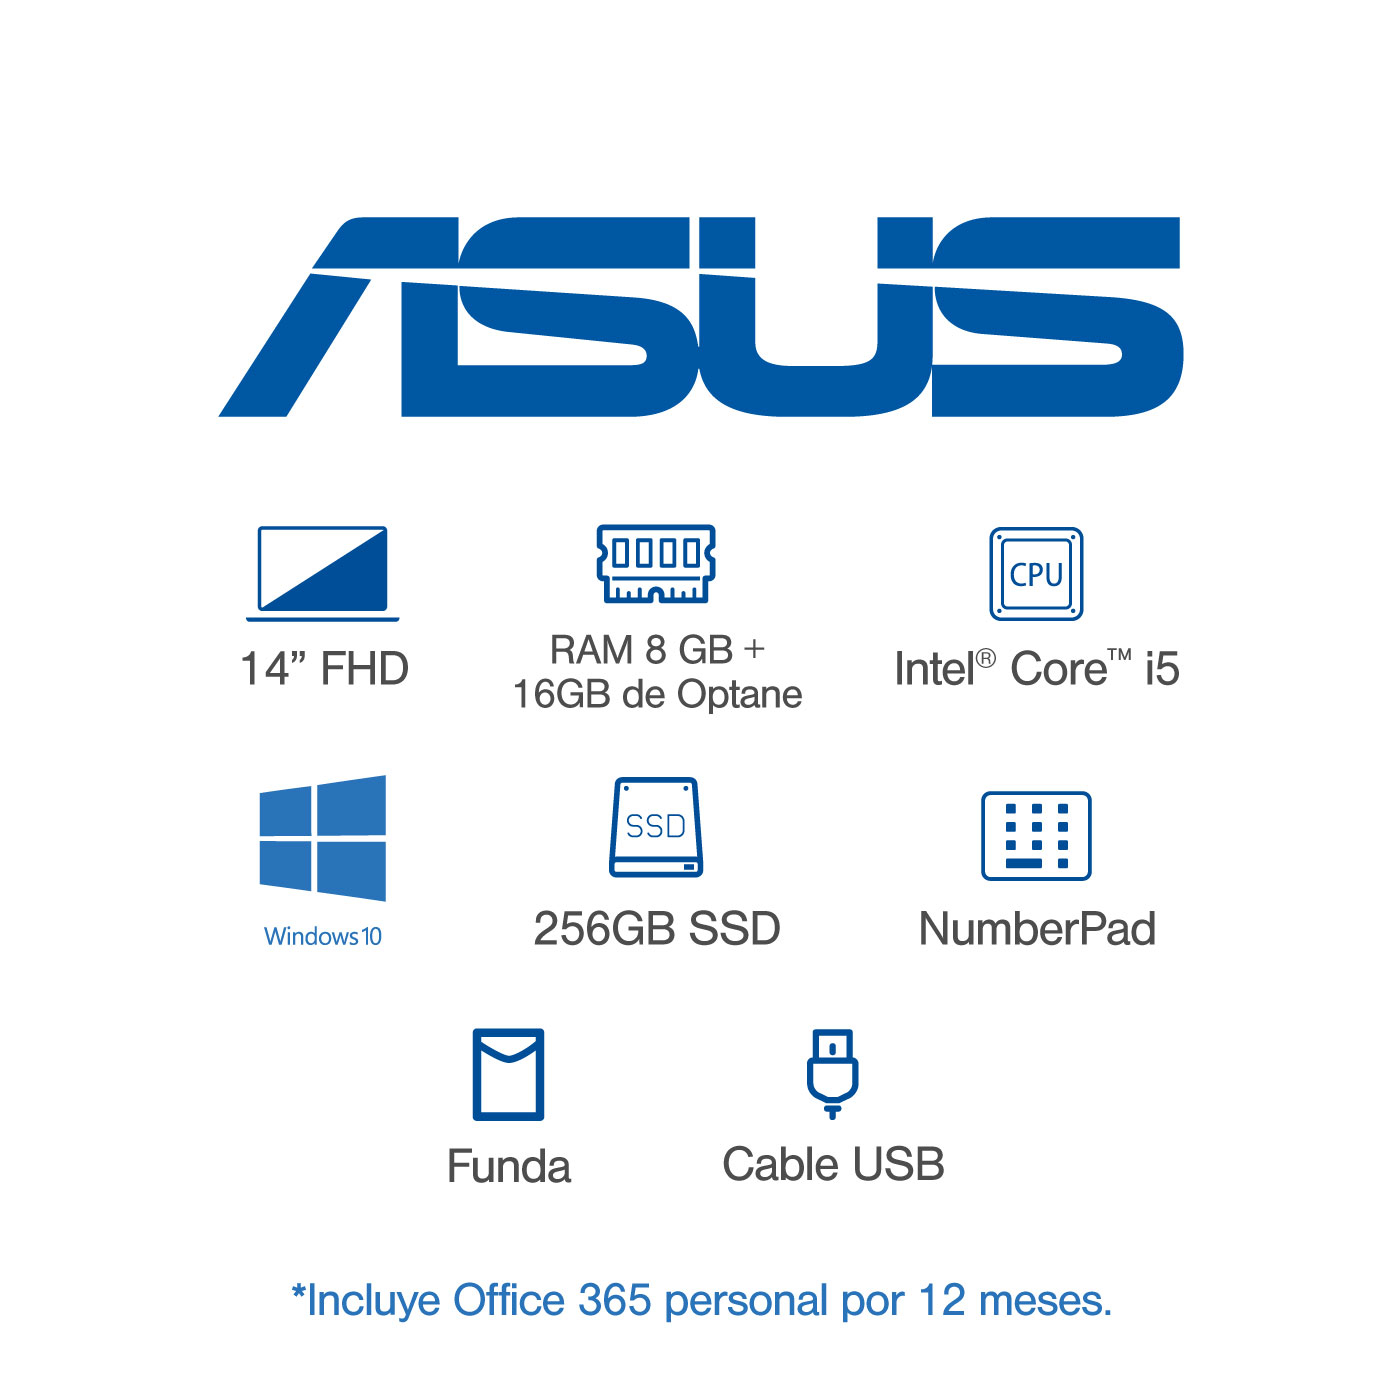 Computador Portátil ASUS Zenbook 14" Pulgadas UX433FAC-A5350TS  Procesador Intel Core i5 RAM 8GB + 16GB Intel Optane Disco Estado Sólido 256 GB